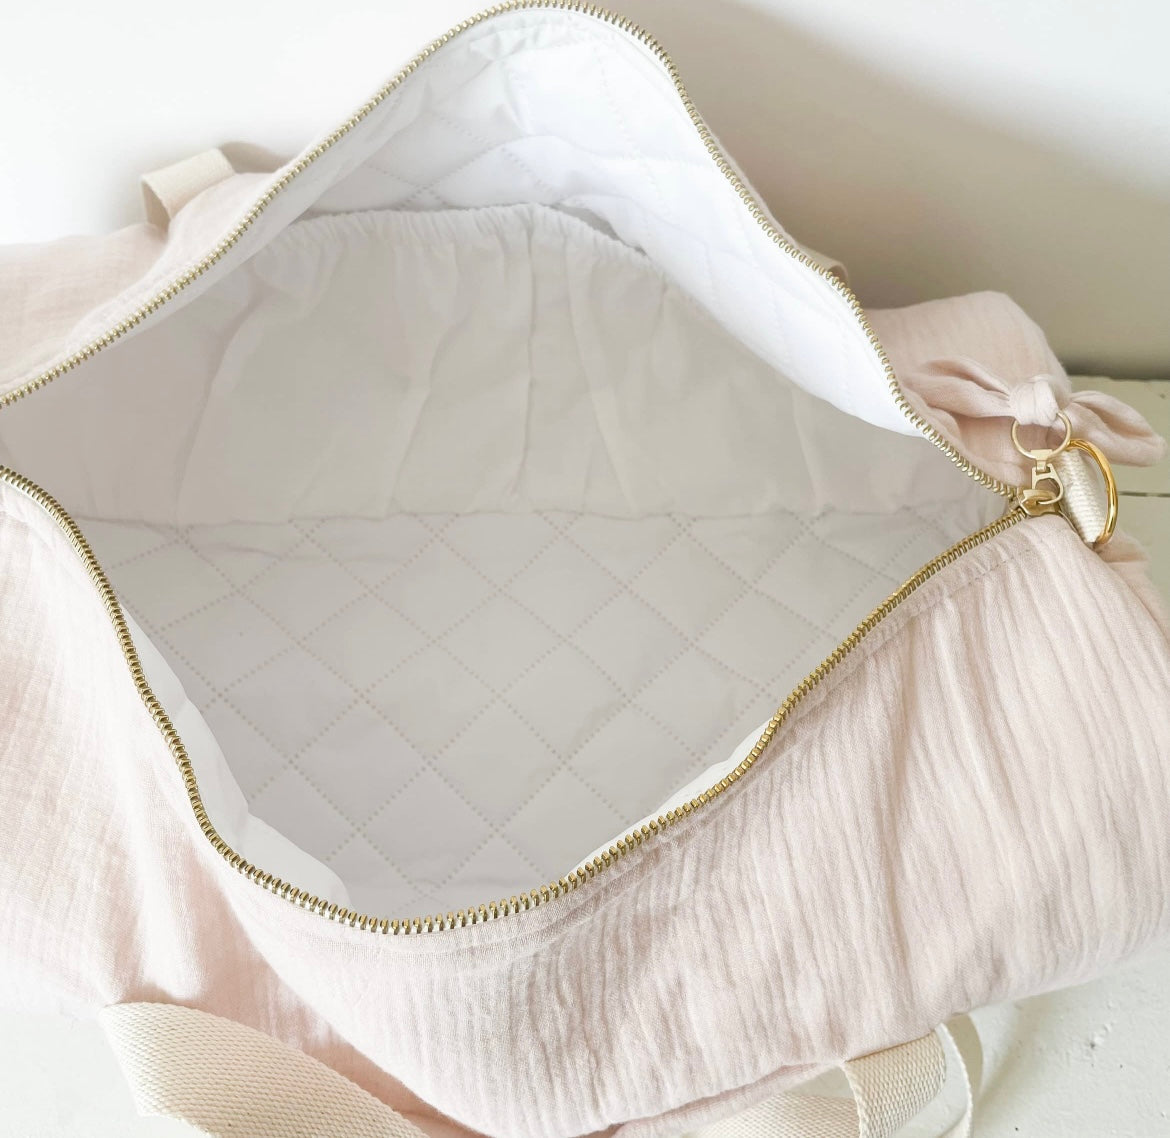 Cotton Gauze Diaper Bag in Powder Pink from Paris